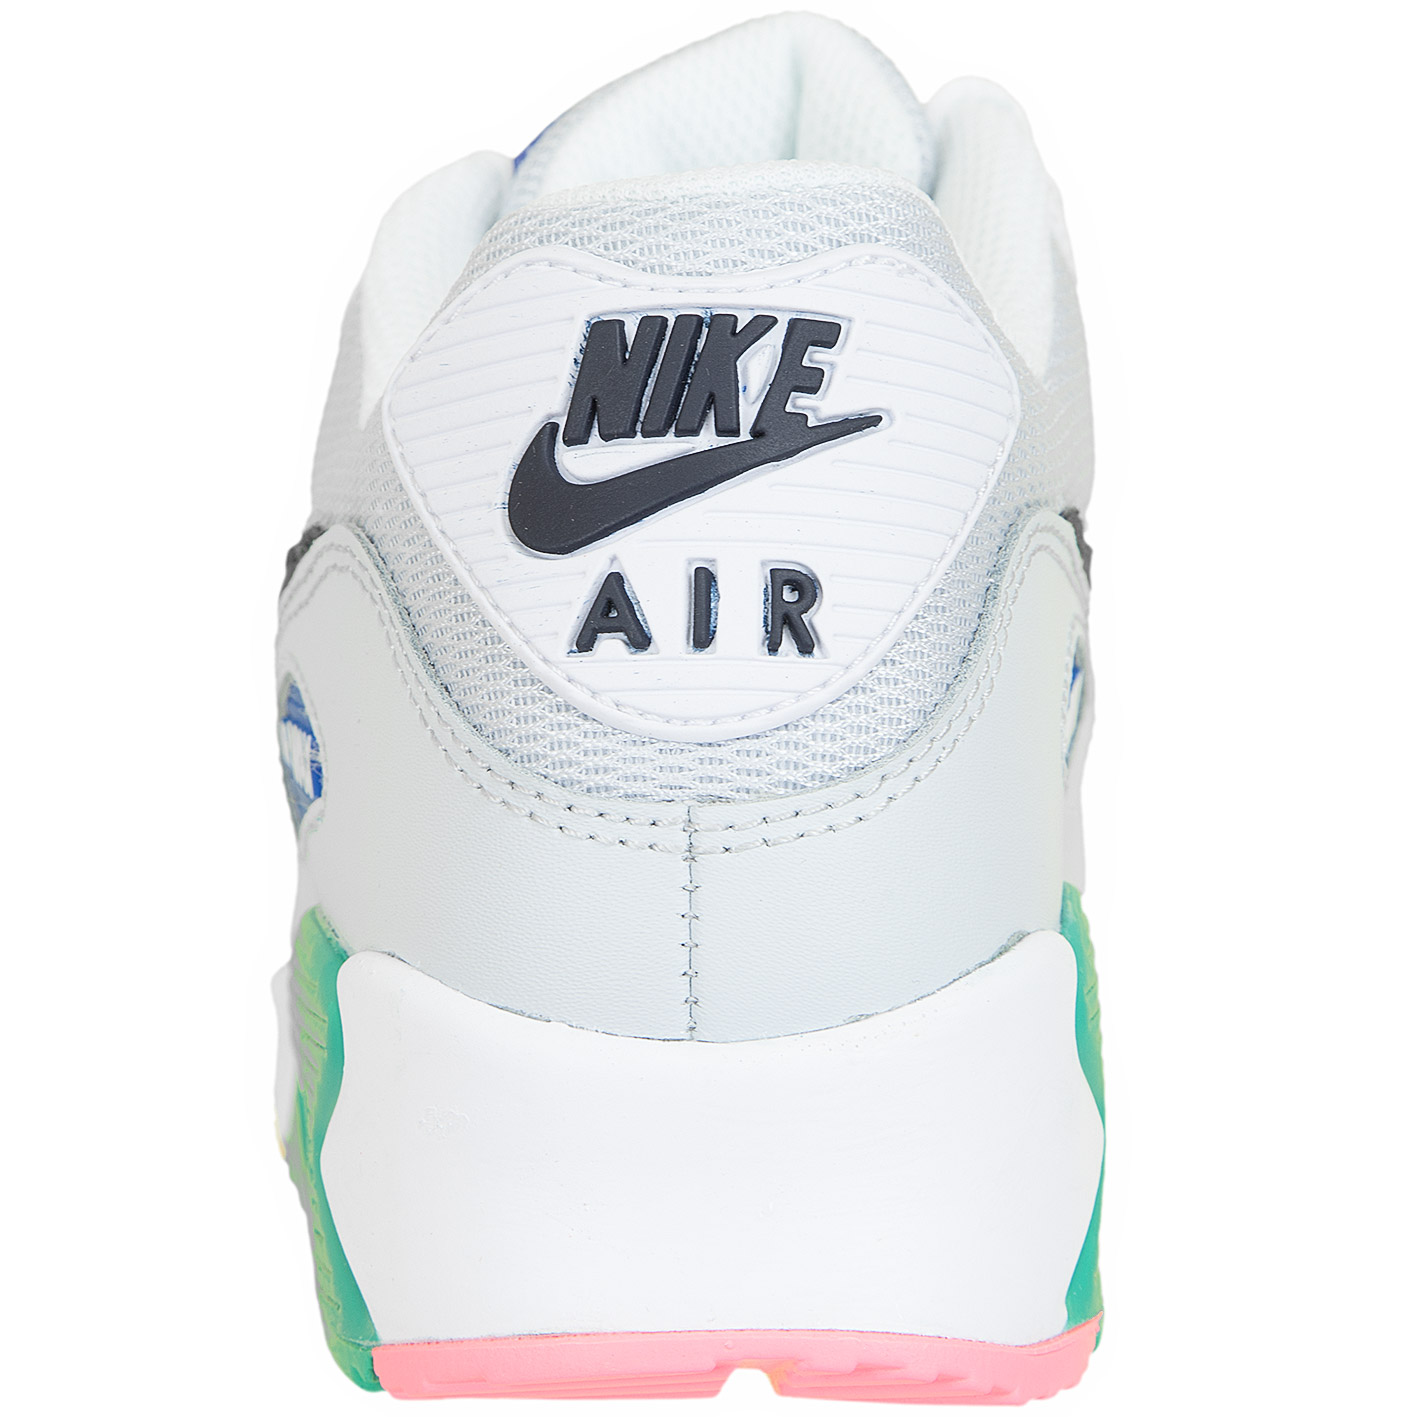 ☆ Nike Damen Sneaker Air Max 90 Essential weiß/pink/grün - hier bestellen!